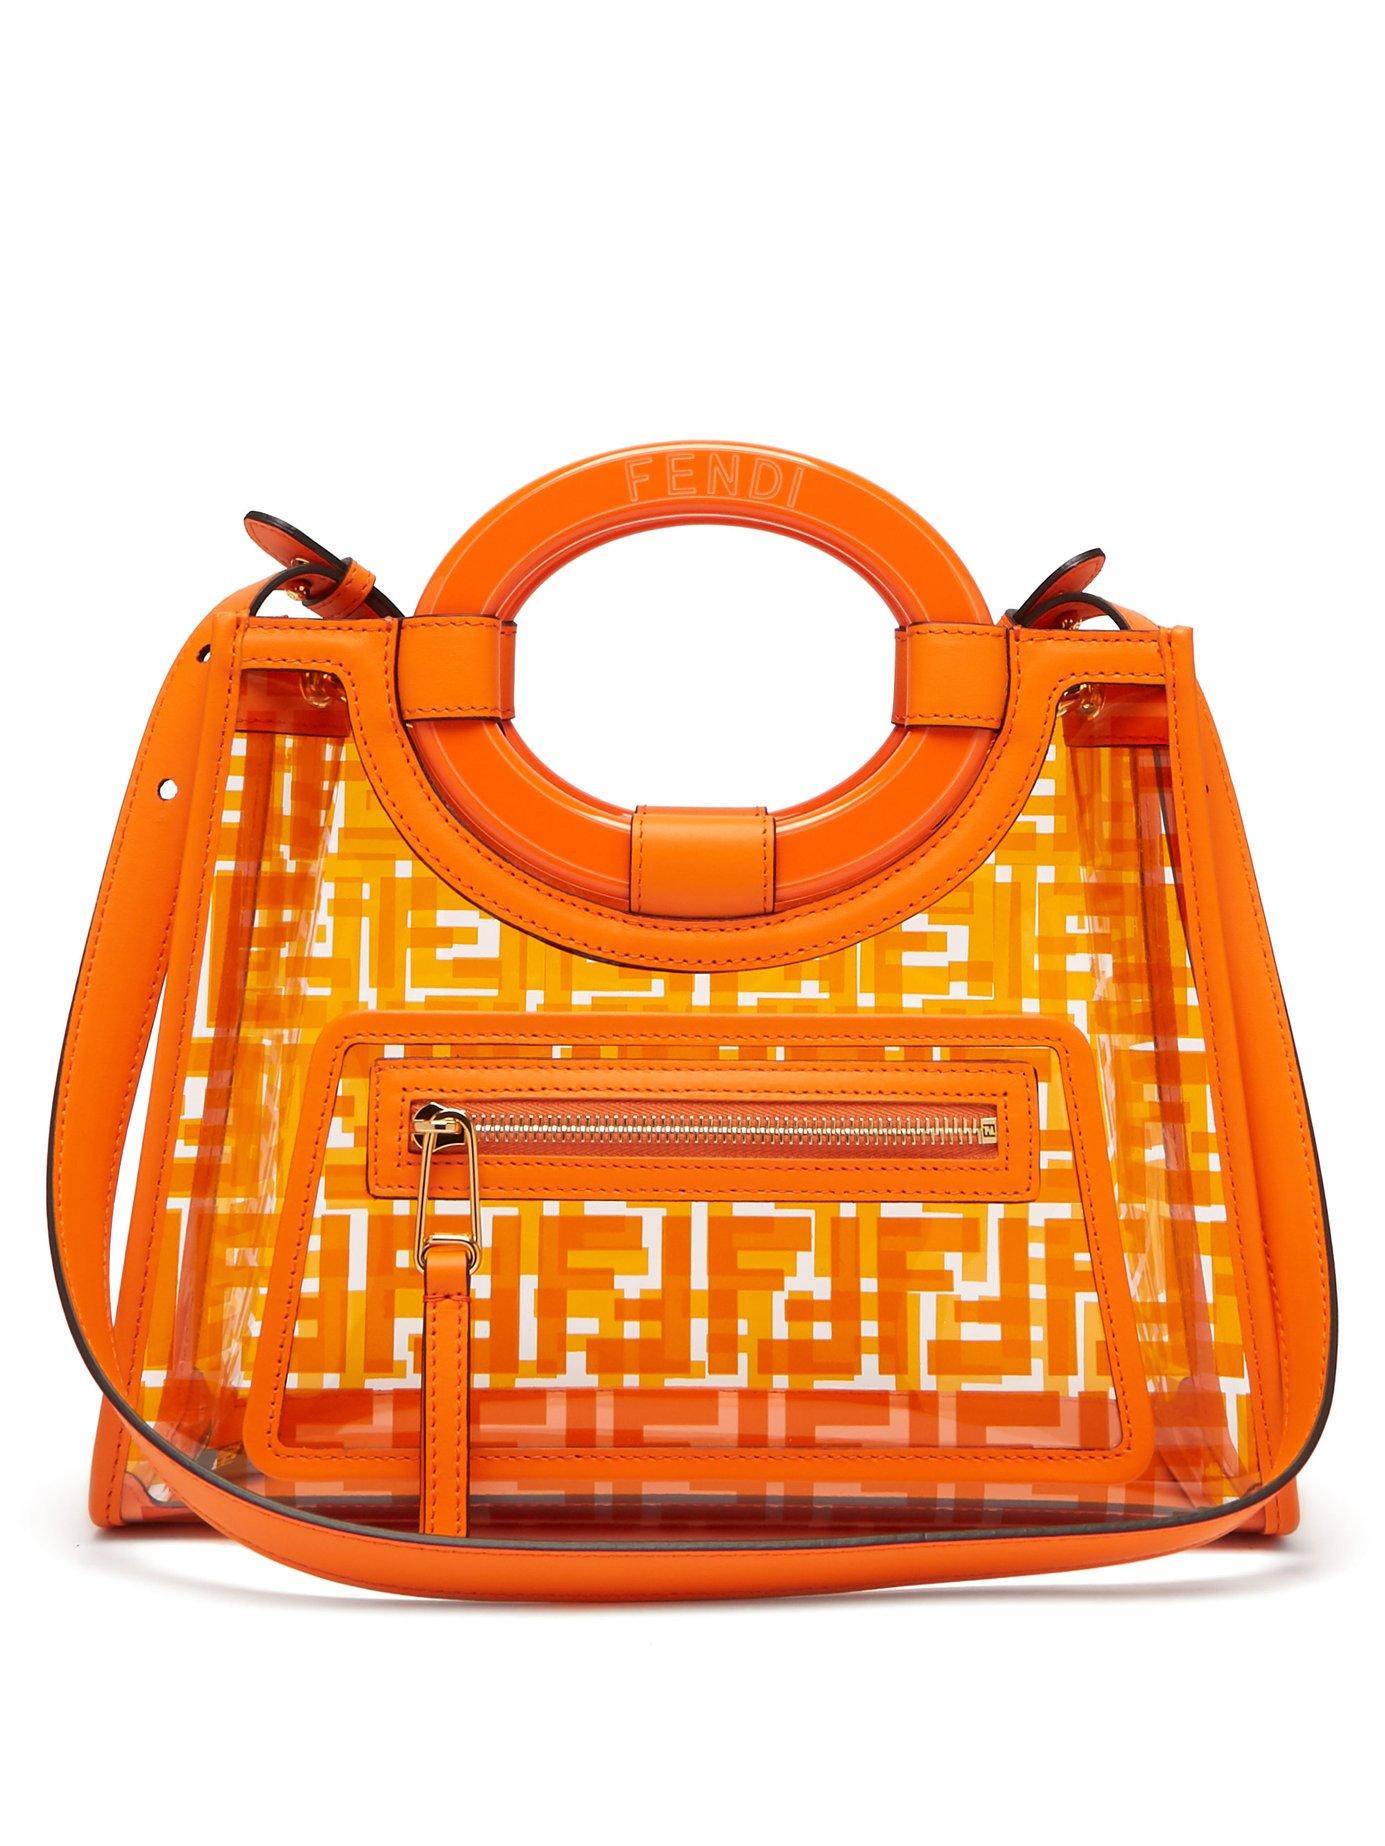 Fendi Runaway Logo Print Leather & Pvc Bag in Orange | Lyst